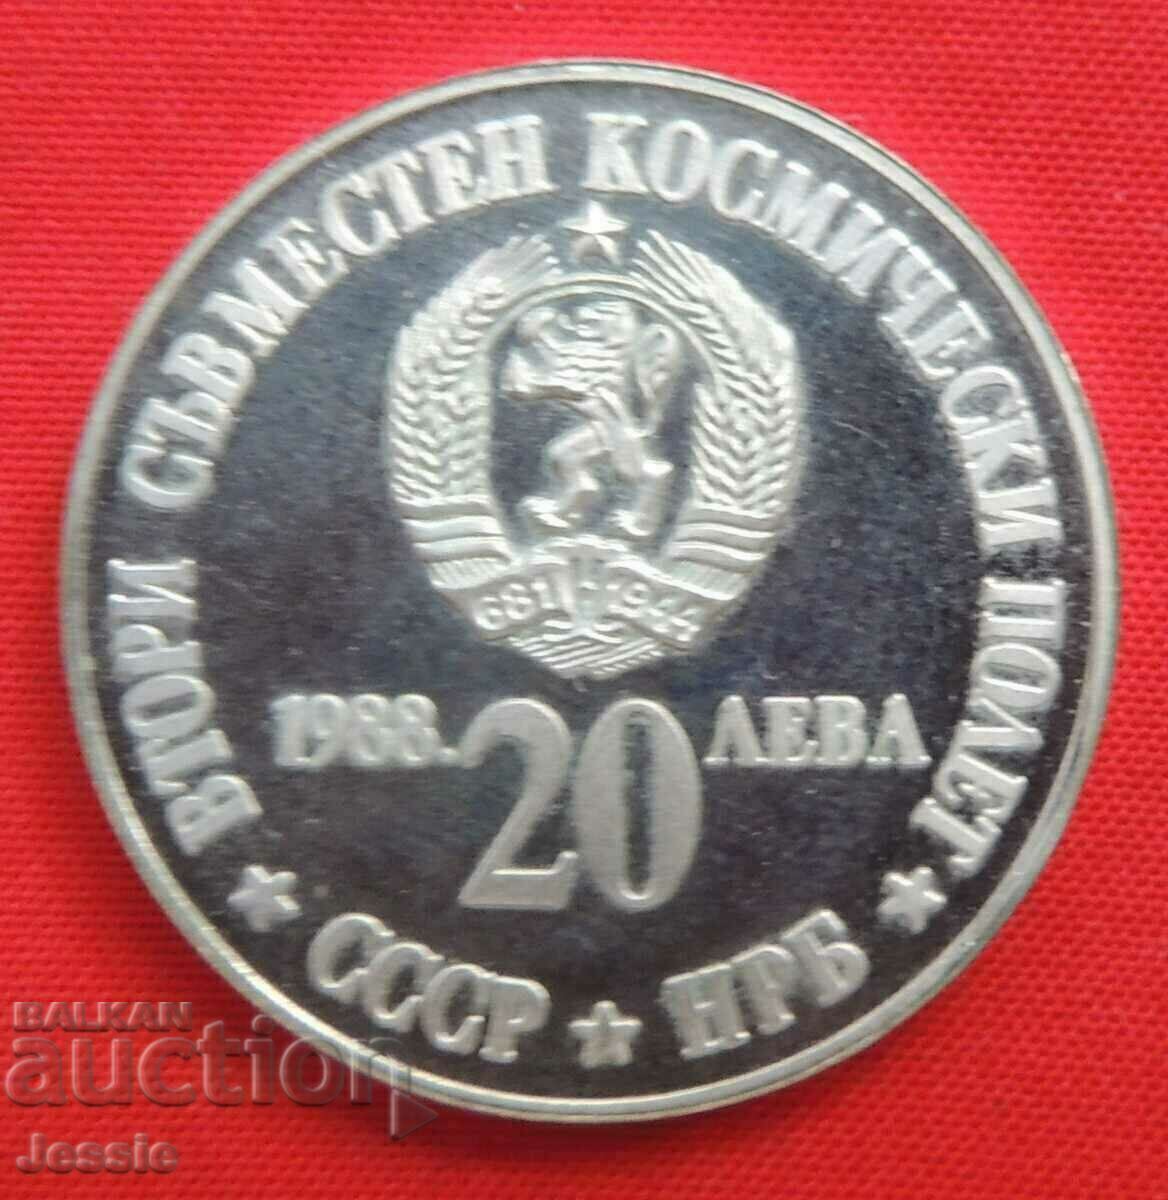 20 BGN 1988 Al doilea zbor URSS- NRB MINT #1A SOLD OUT IN BNB